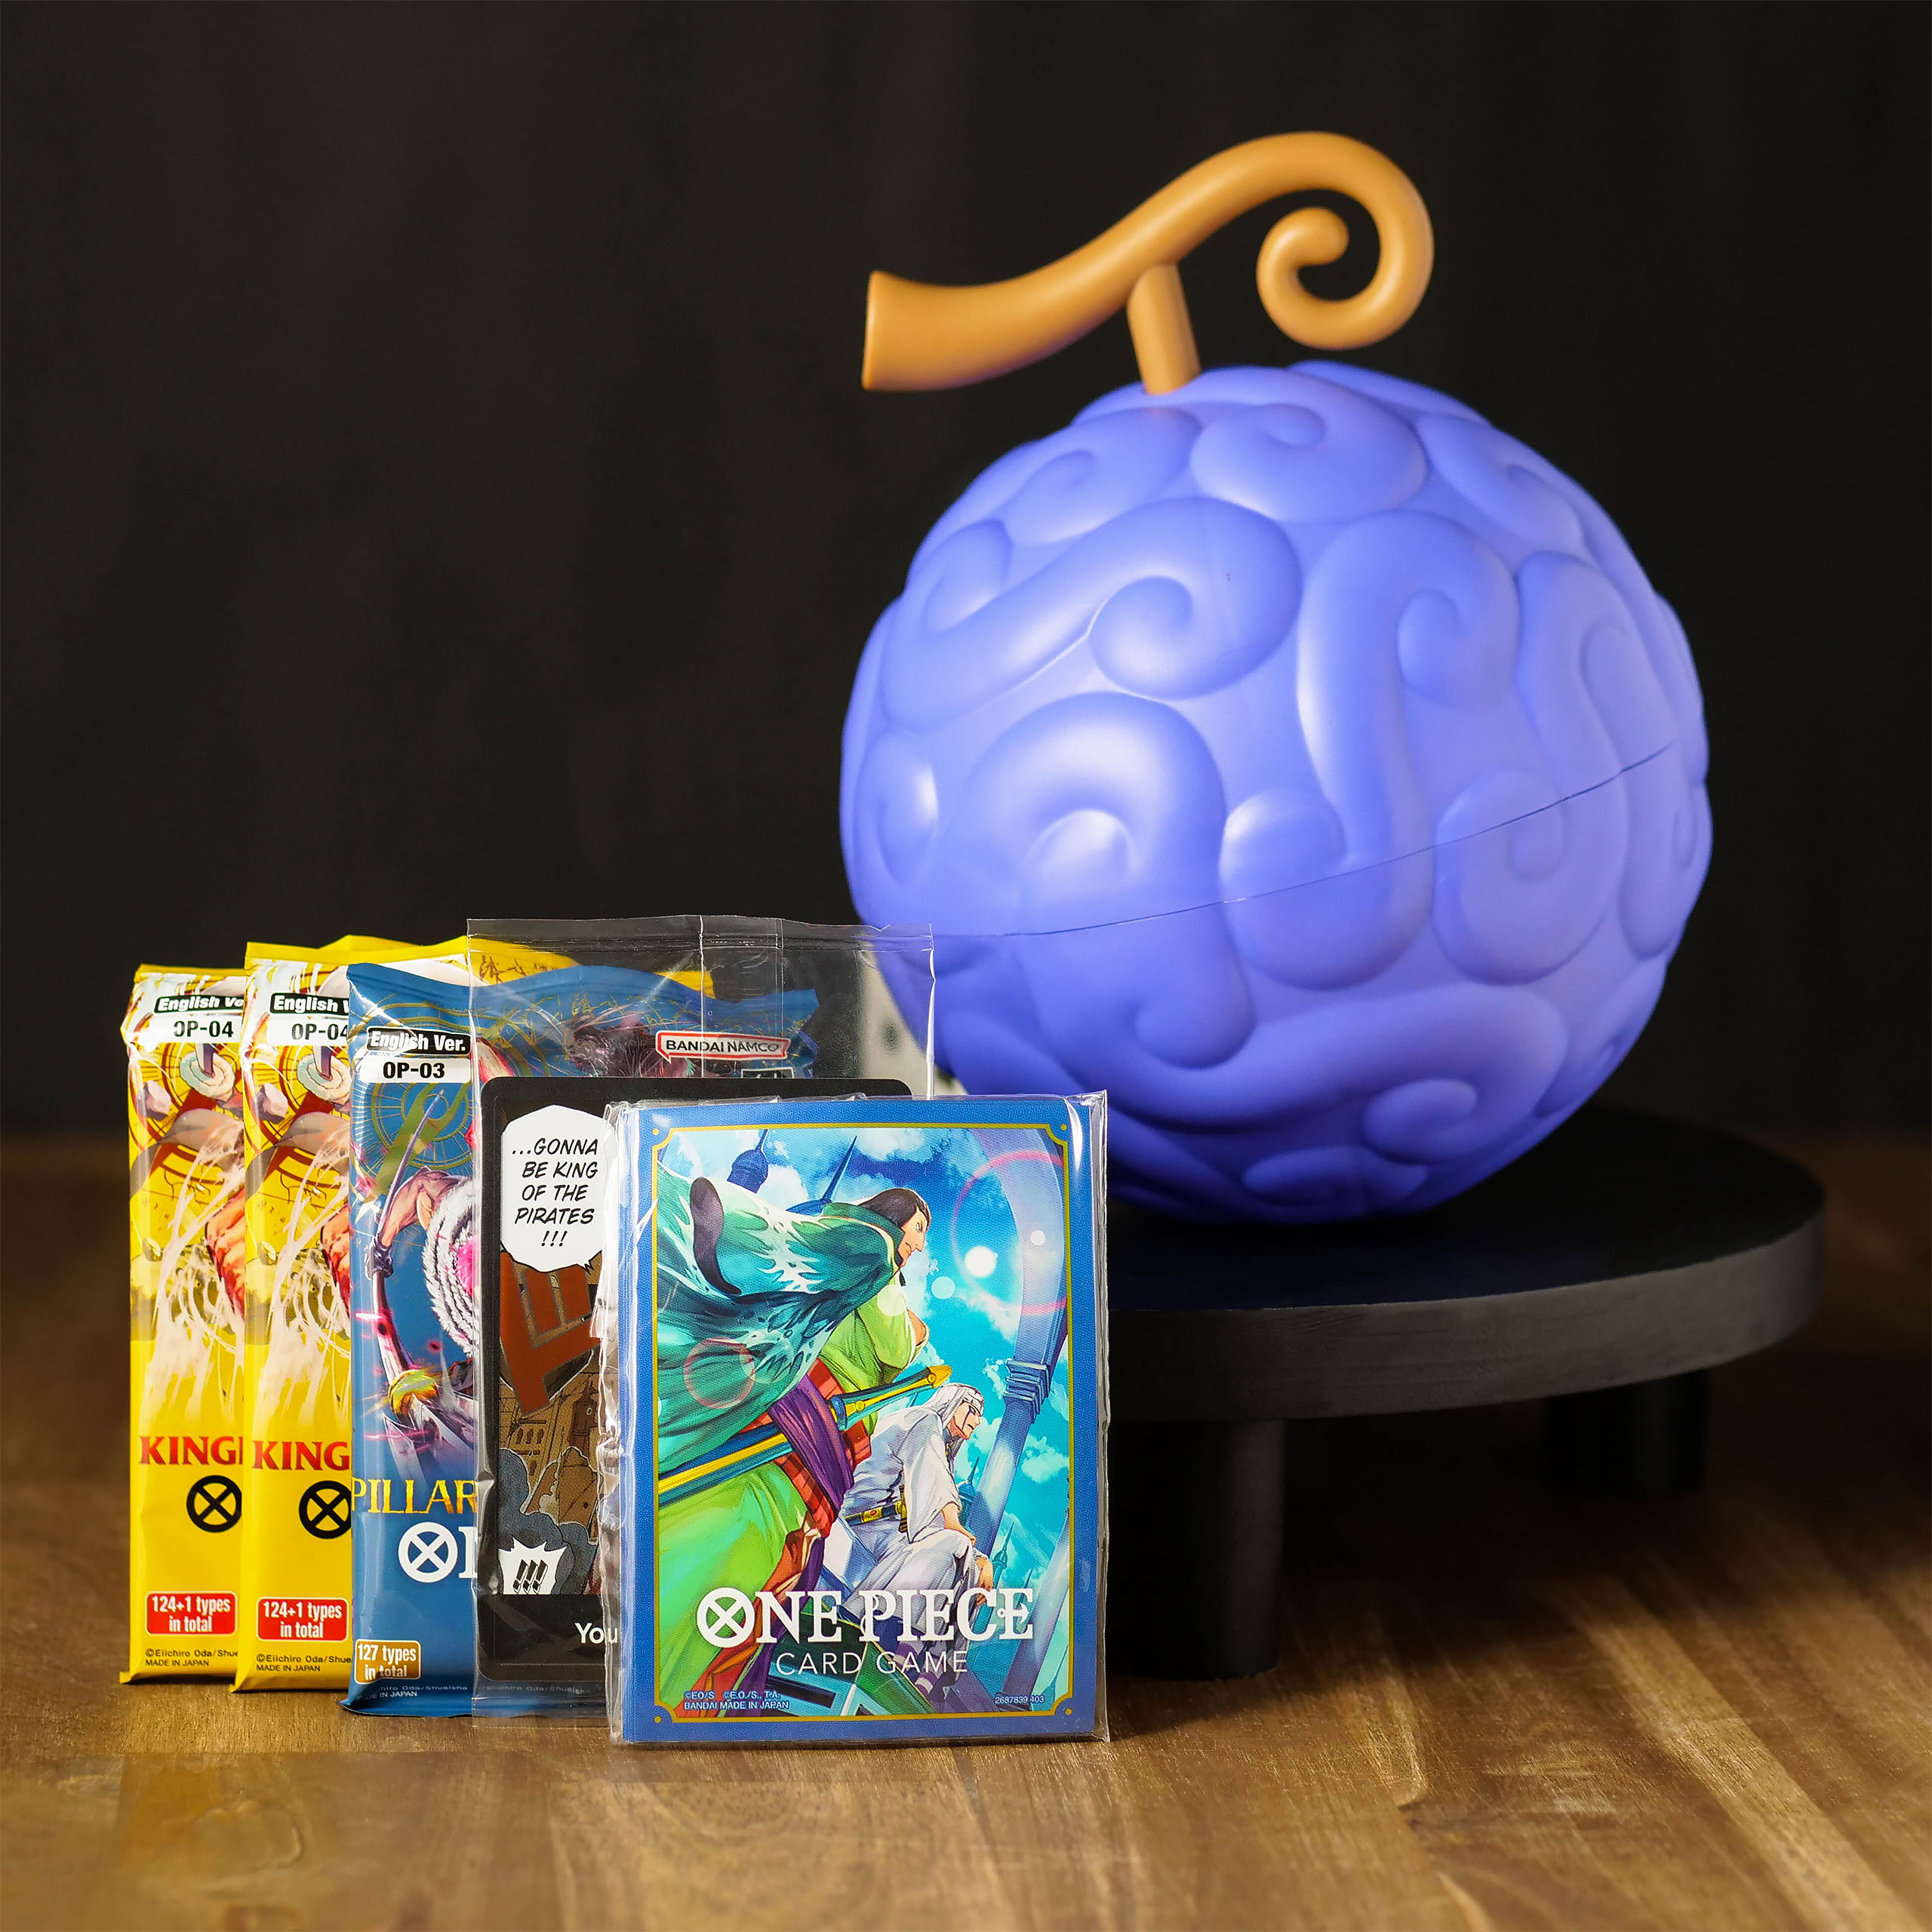 Boite de Rangement One Piece Card Game